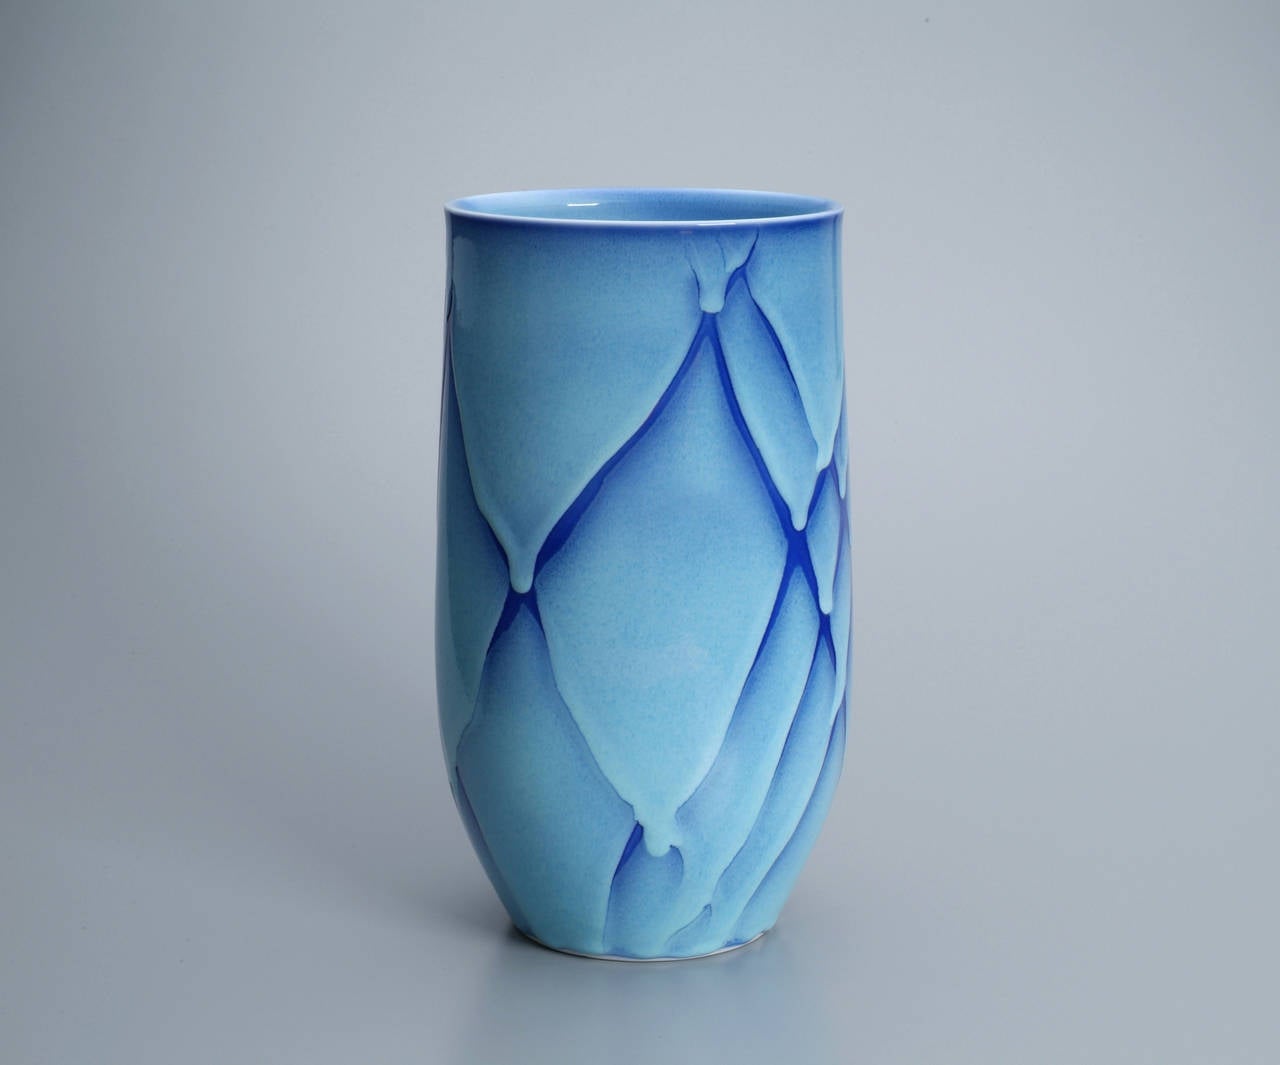 Flower Vase in Blue - Sculpture by Ken Shomura